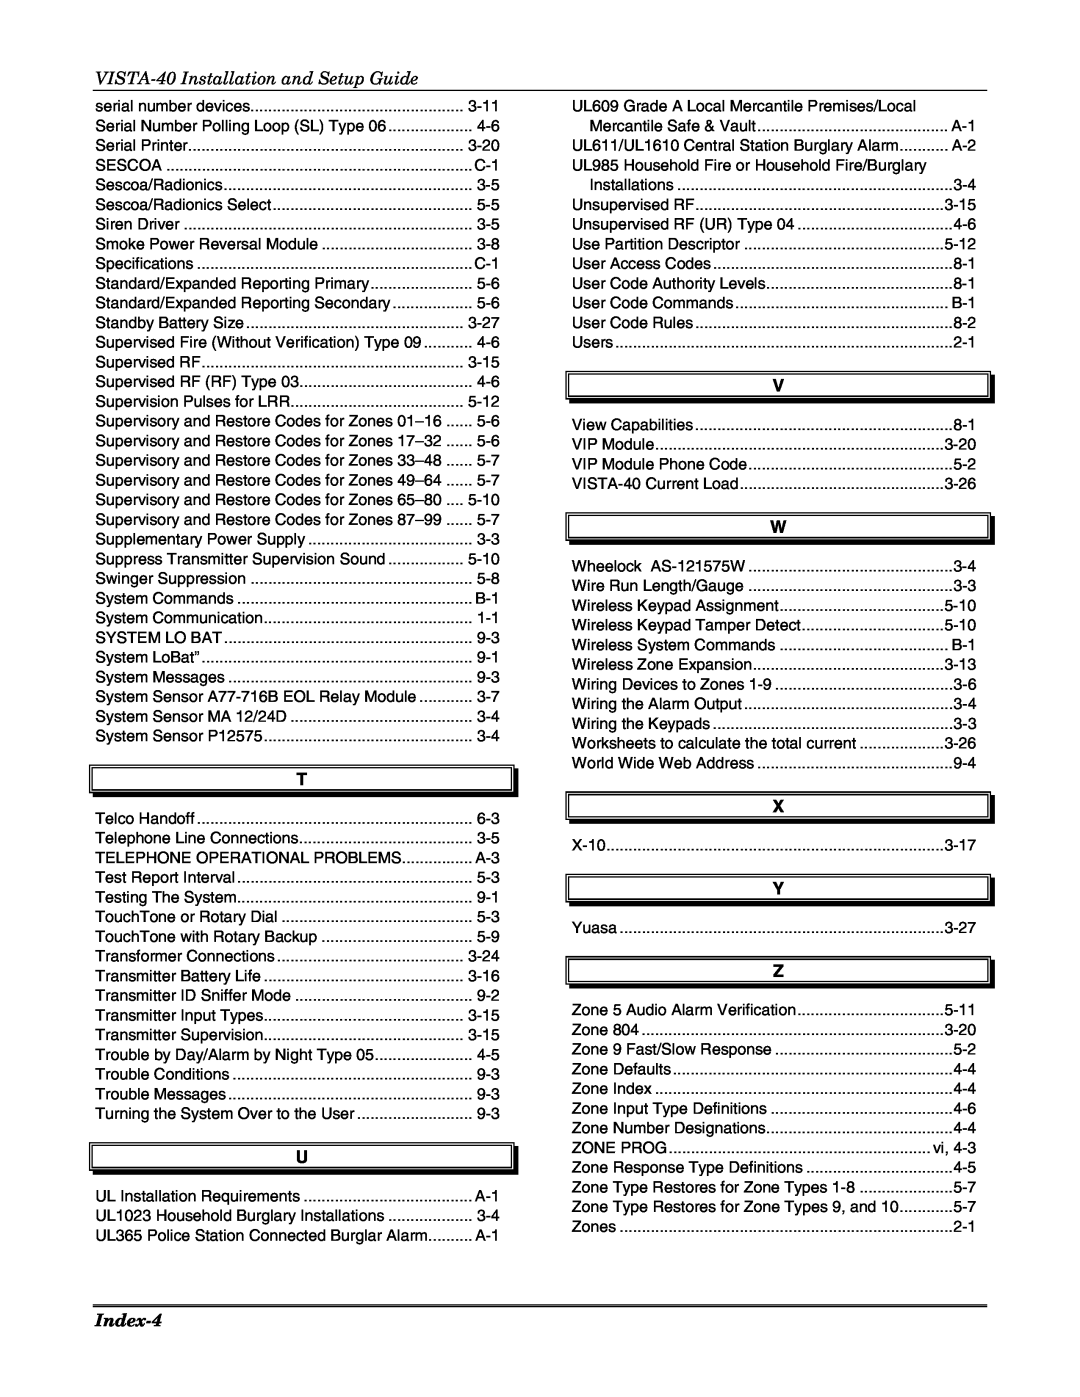 Honeywell ZyAIR G-3000, 3.5 manual VISTA-40Installation and Setup Guide, Index-4 